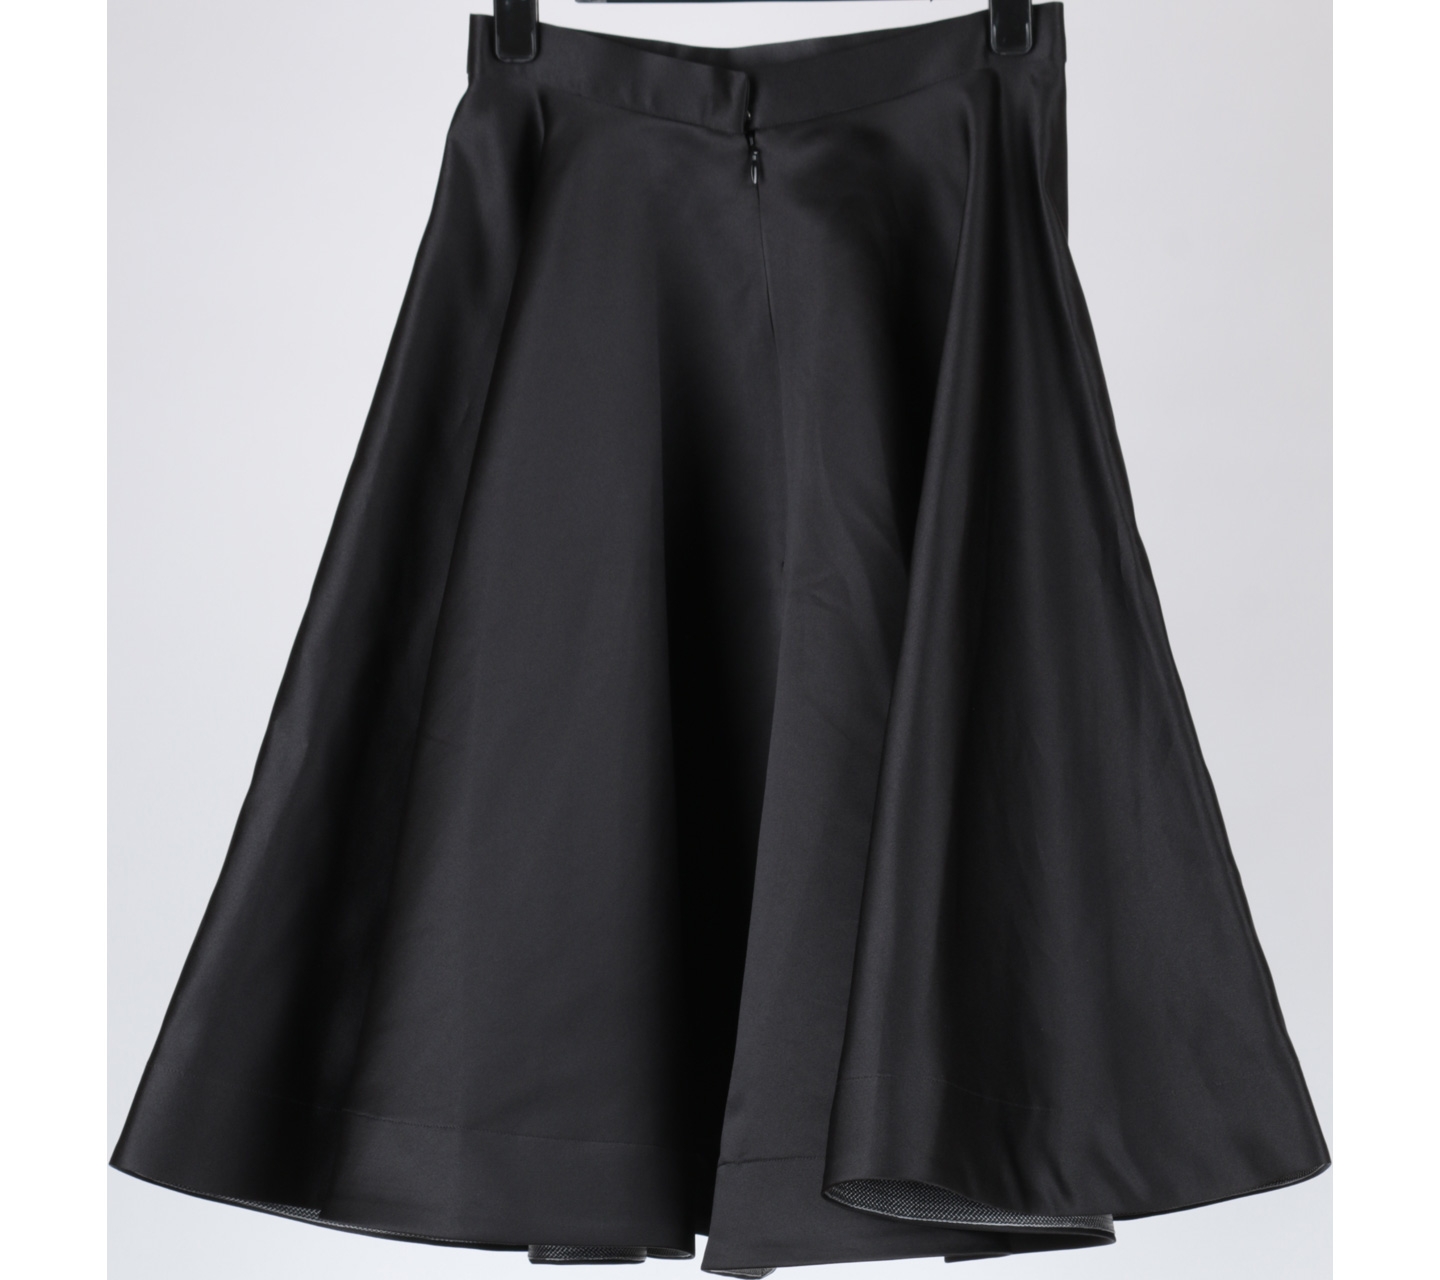 EYI Black Skirt